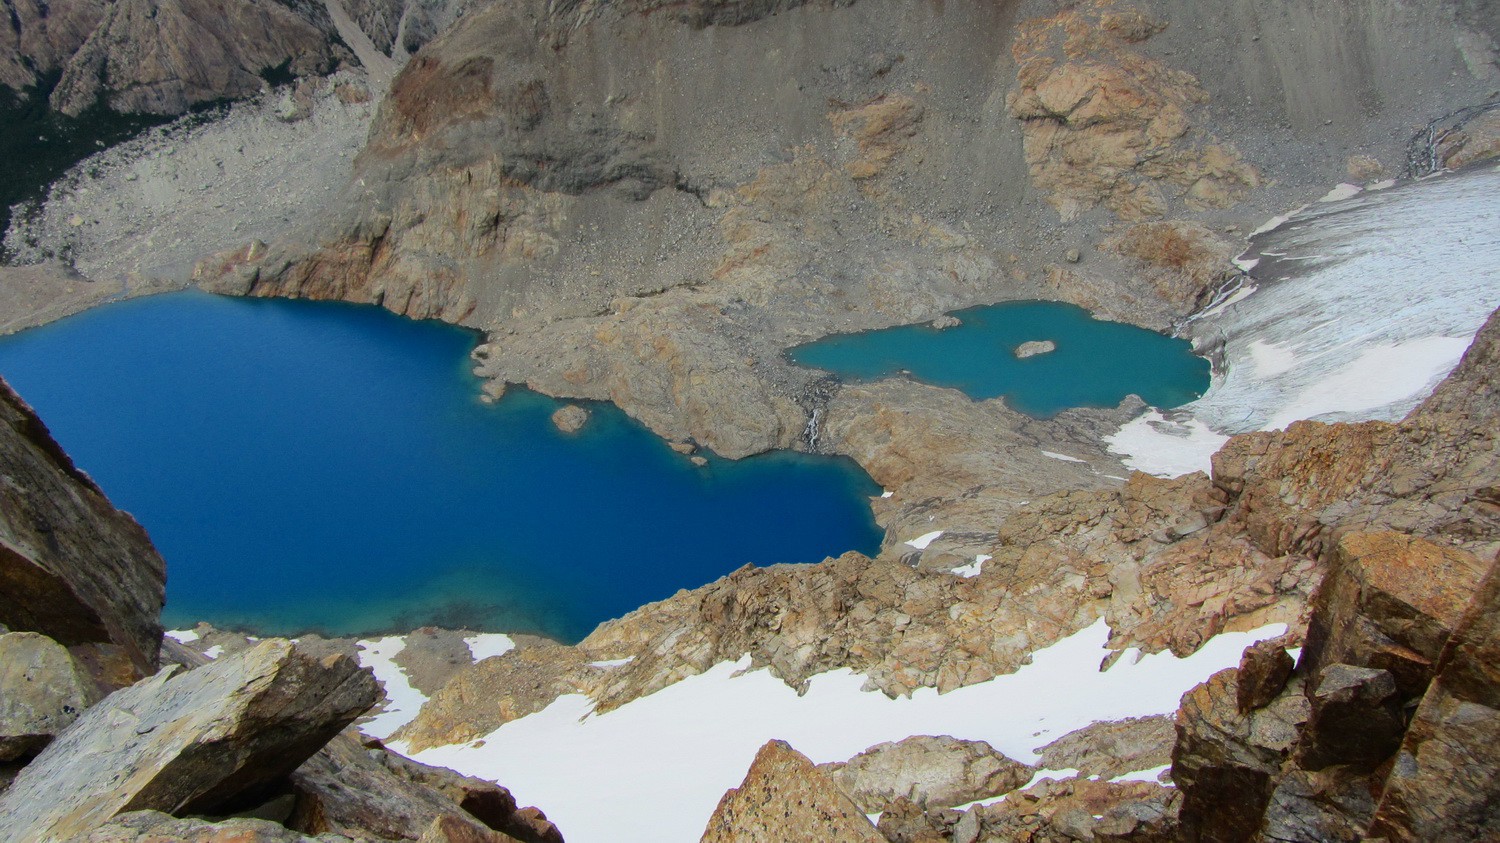 Blue Laguna de los Tres and a green laguna without name with Glaciar de los Tres